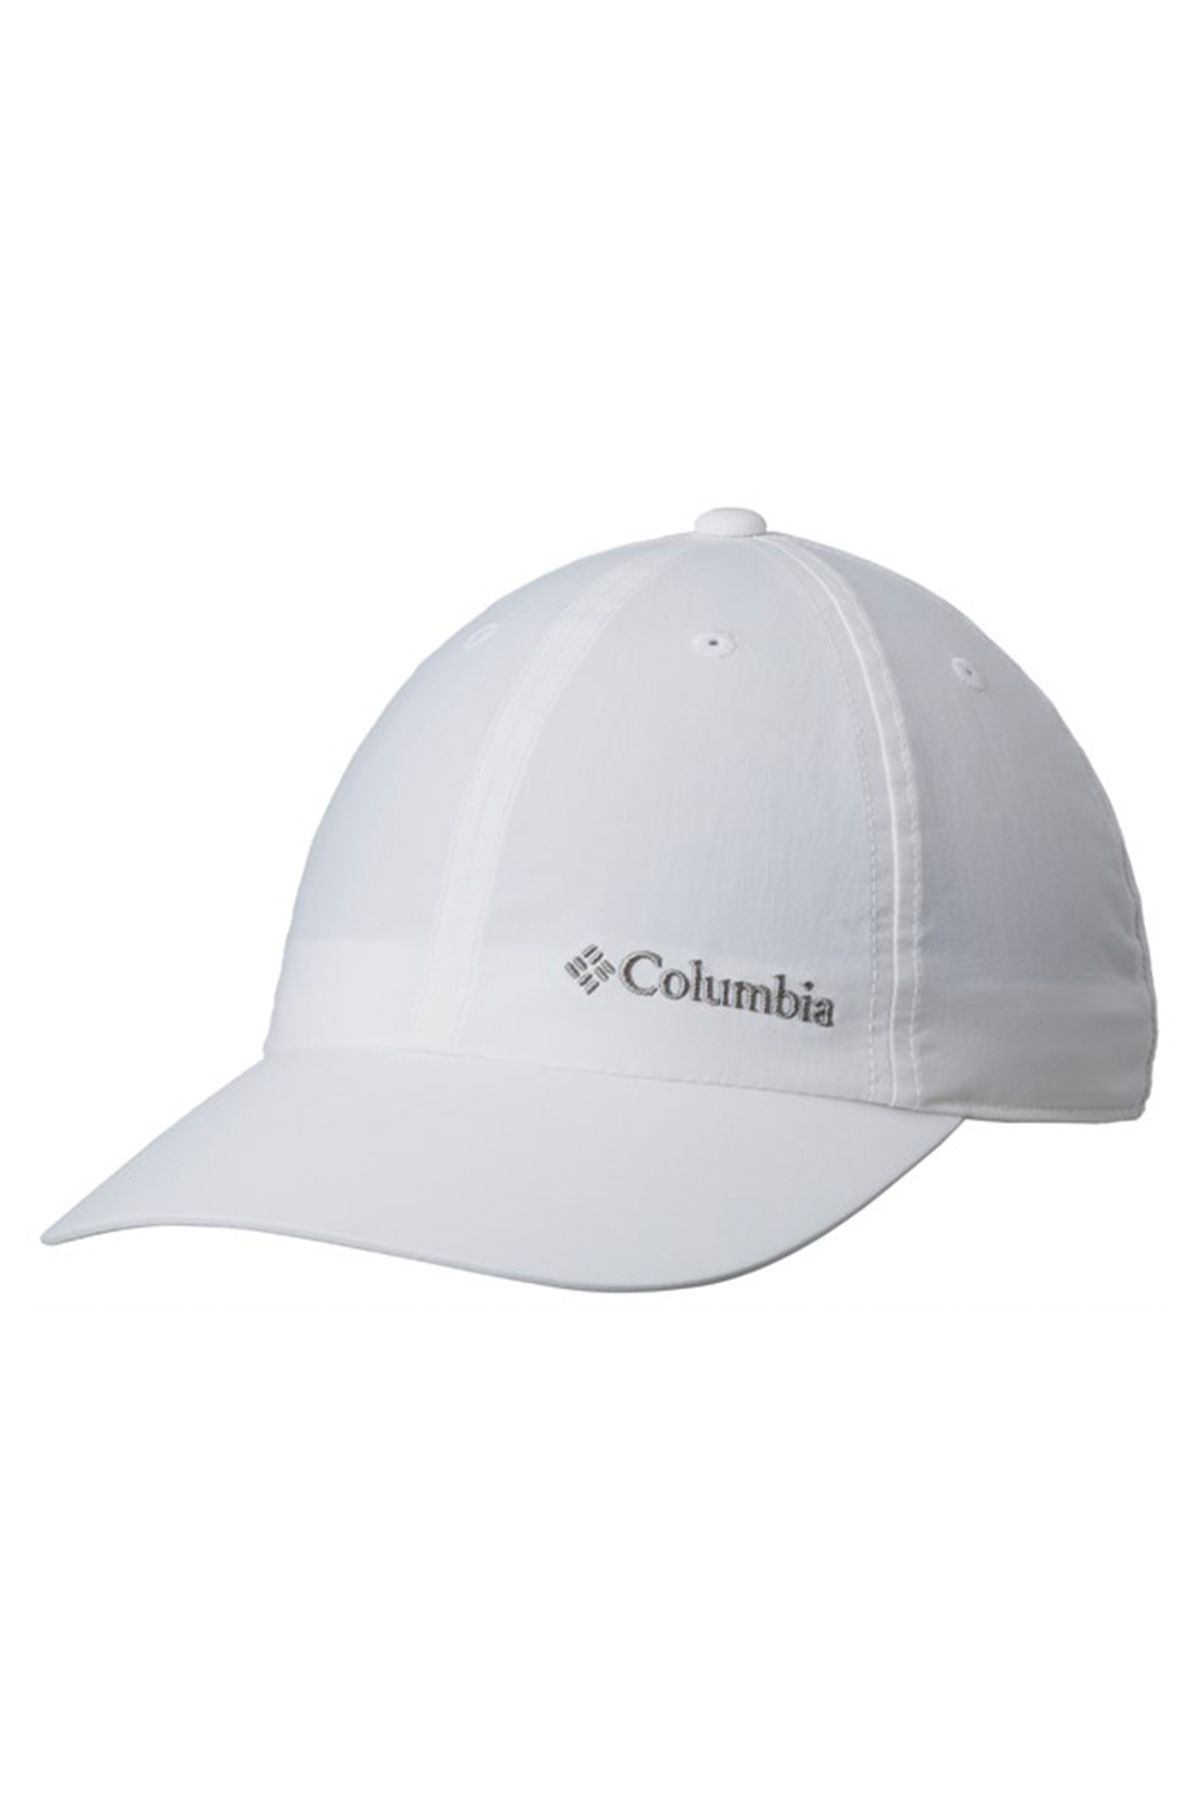 Columbia Unisex White Hat 1819641100-100